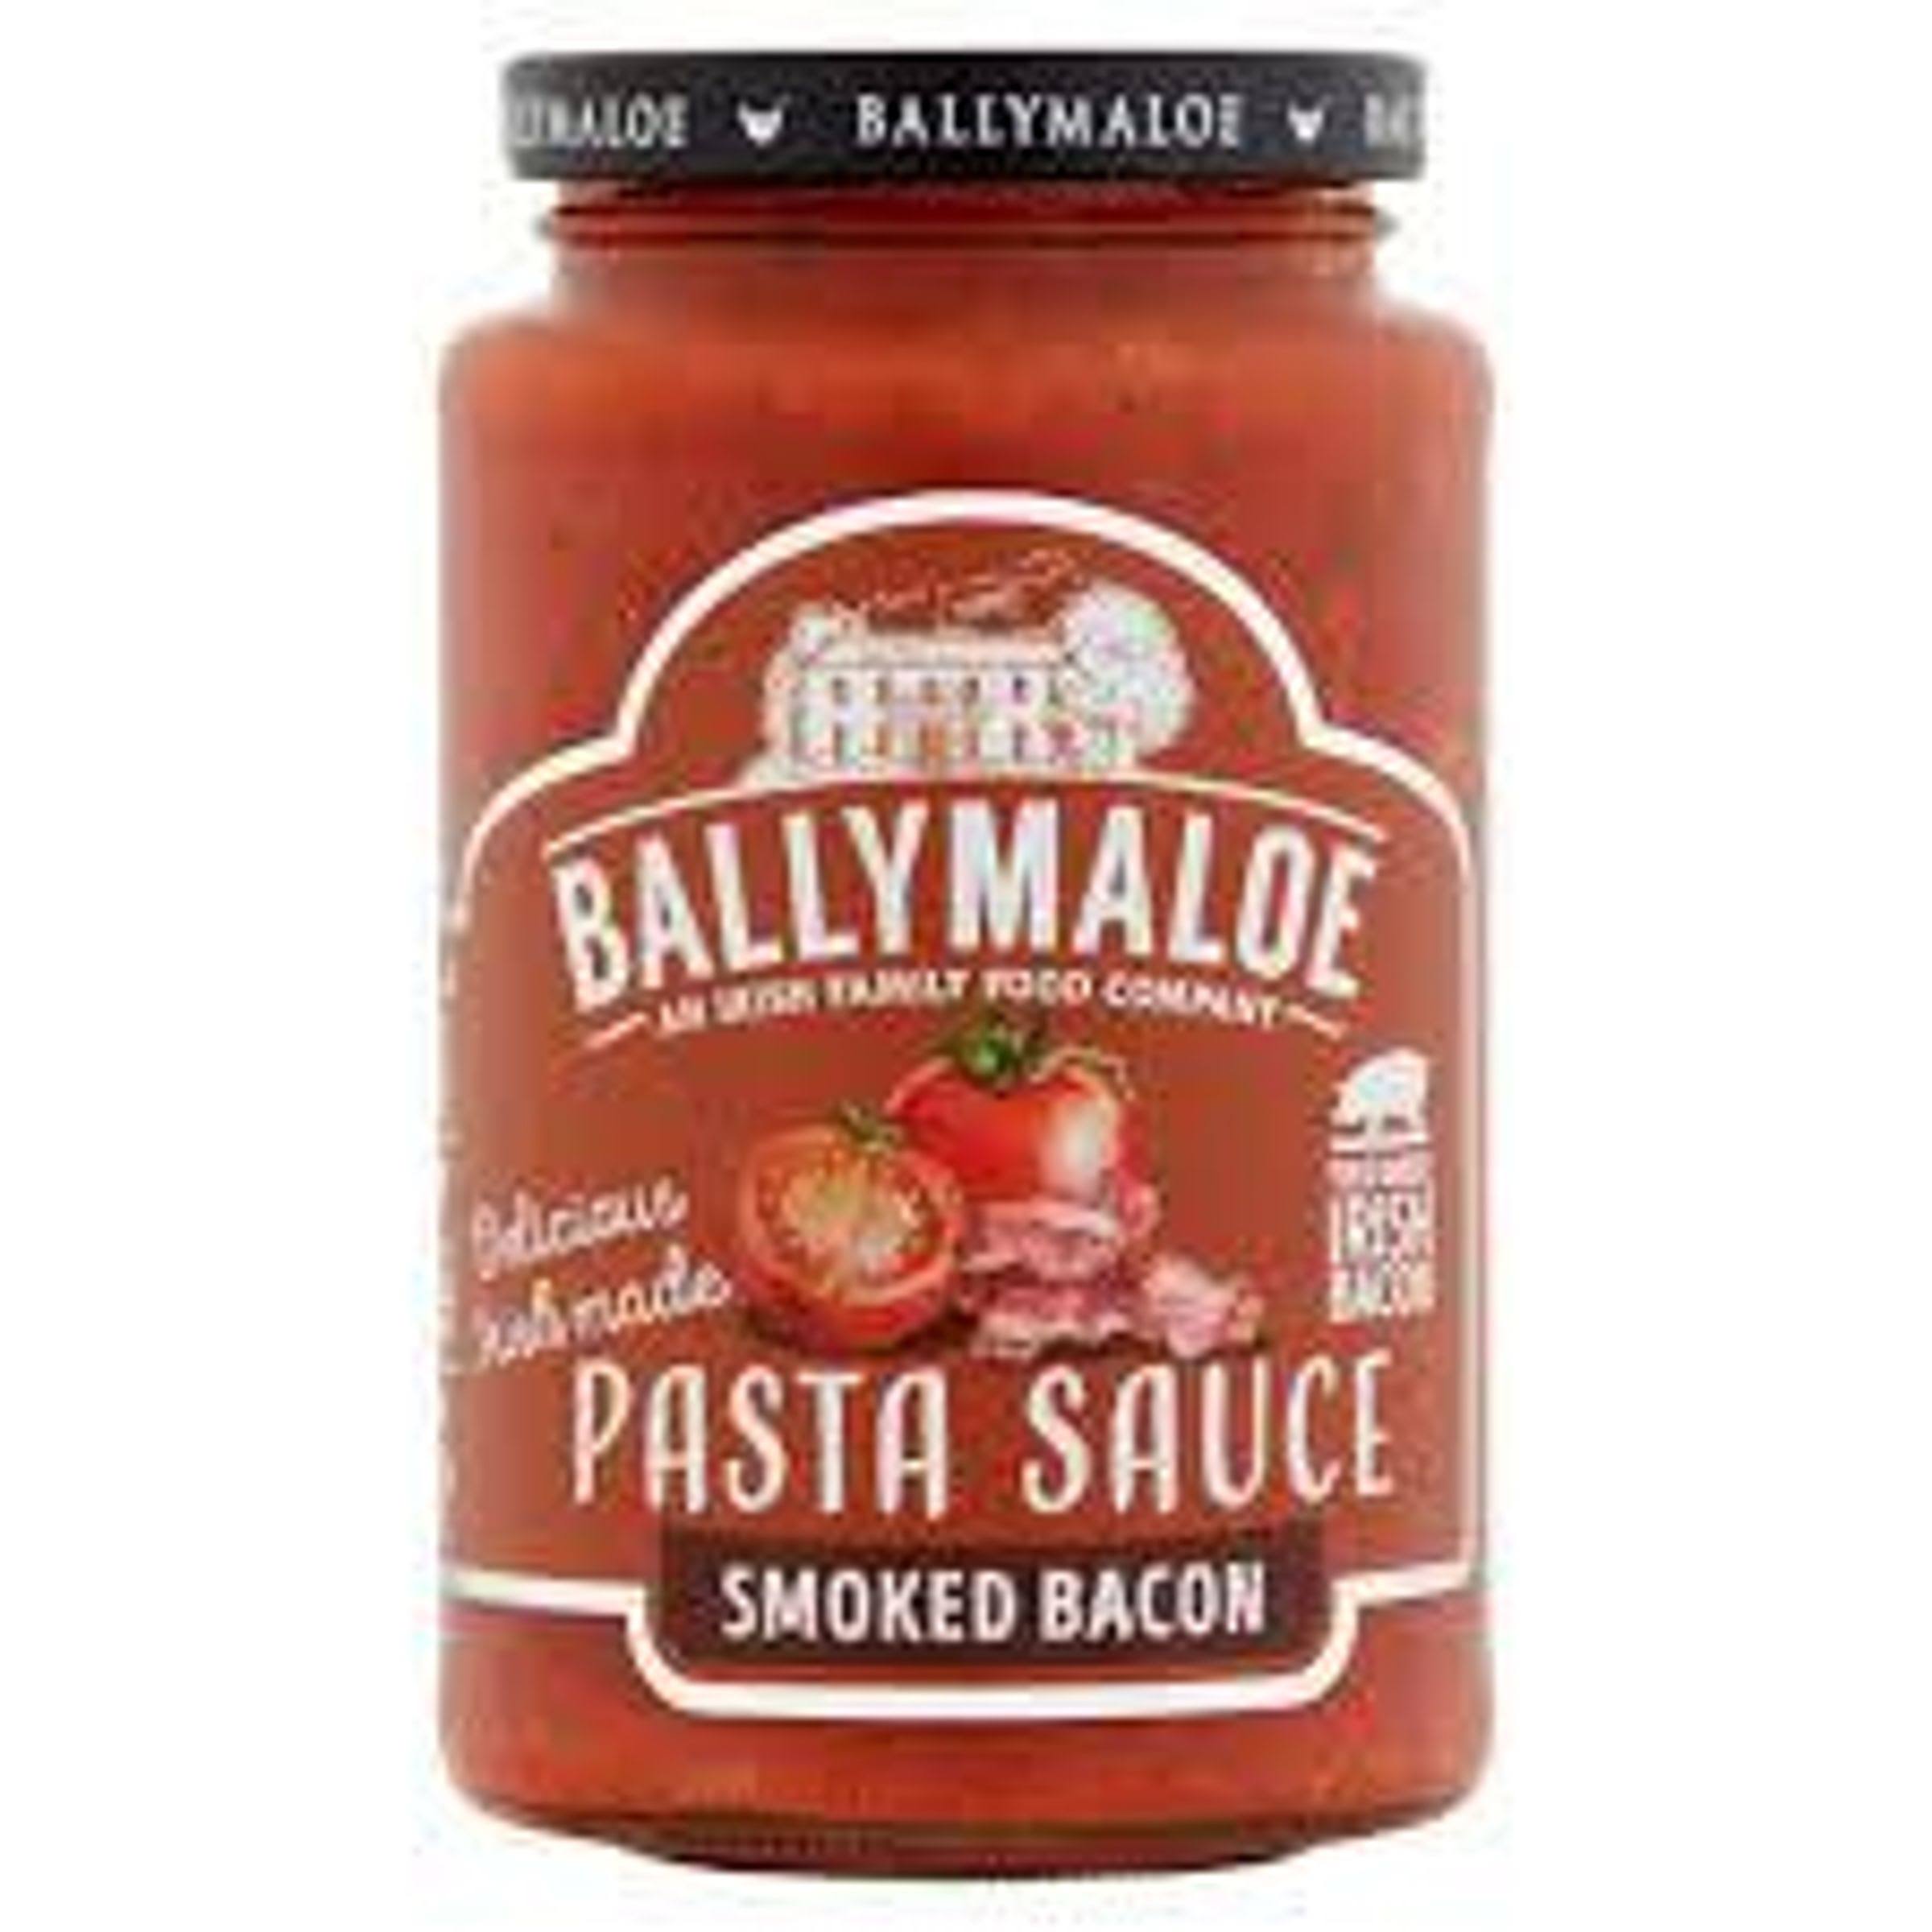 Ballymaloe Pasta Sauce - Smoked Bacon, 400g